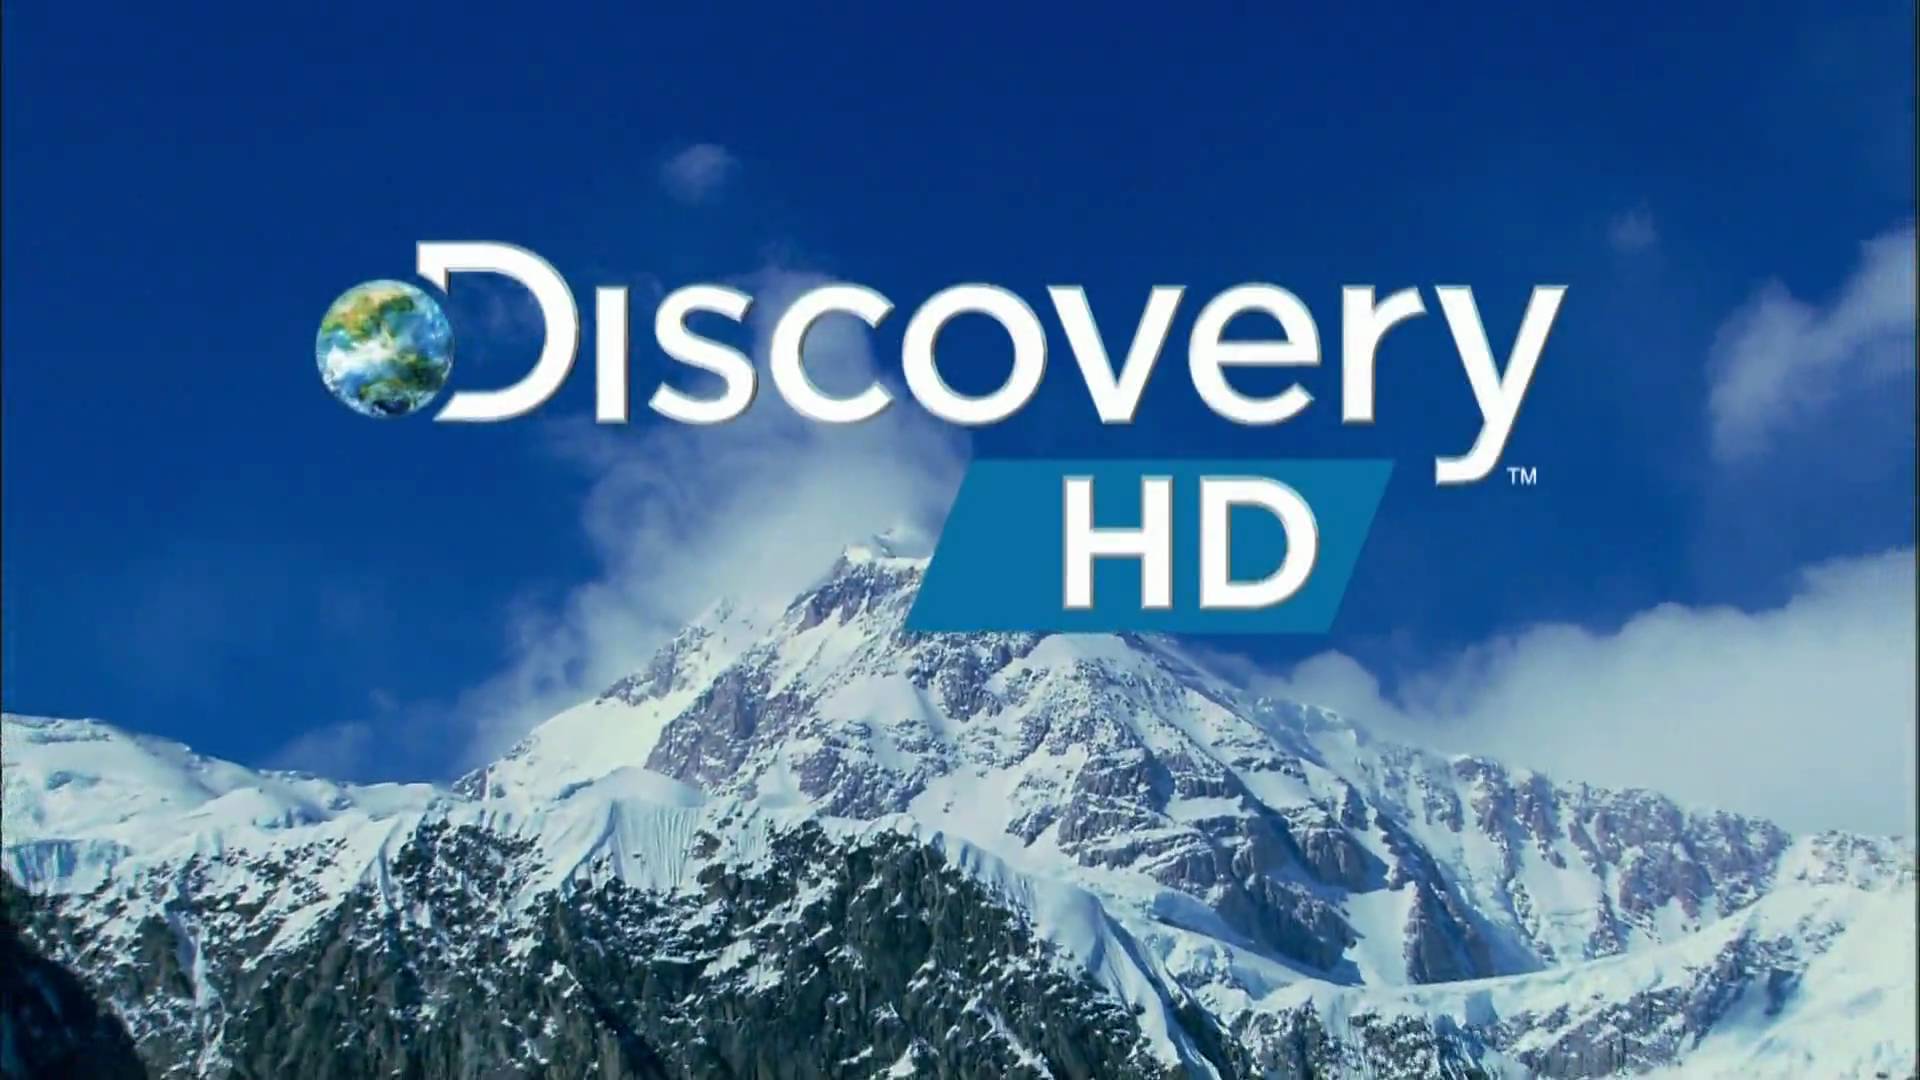 Дискавери ченел программа. Discovery channel. Телеканал Discovery. Дискавери логотип. Дискавери заставка.